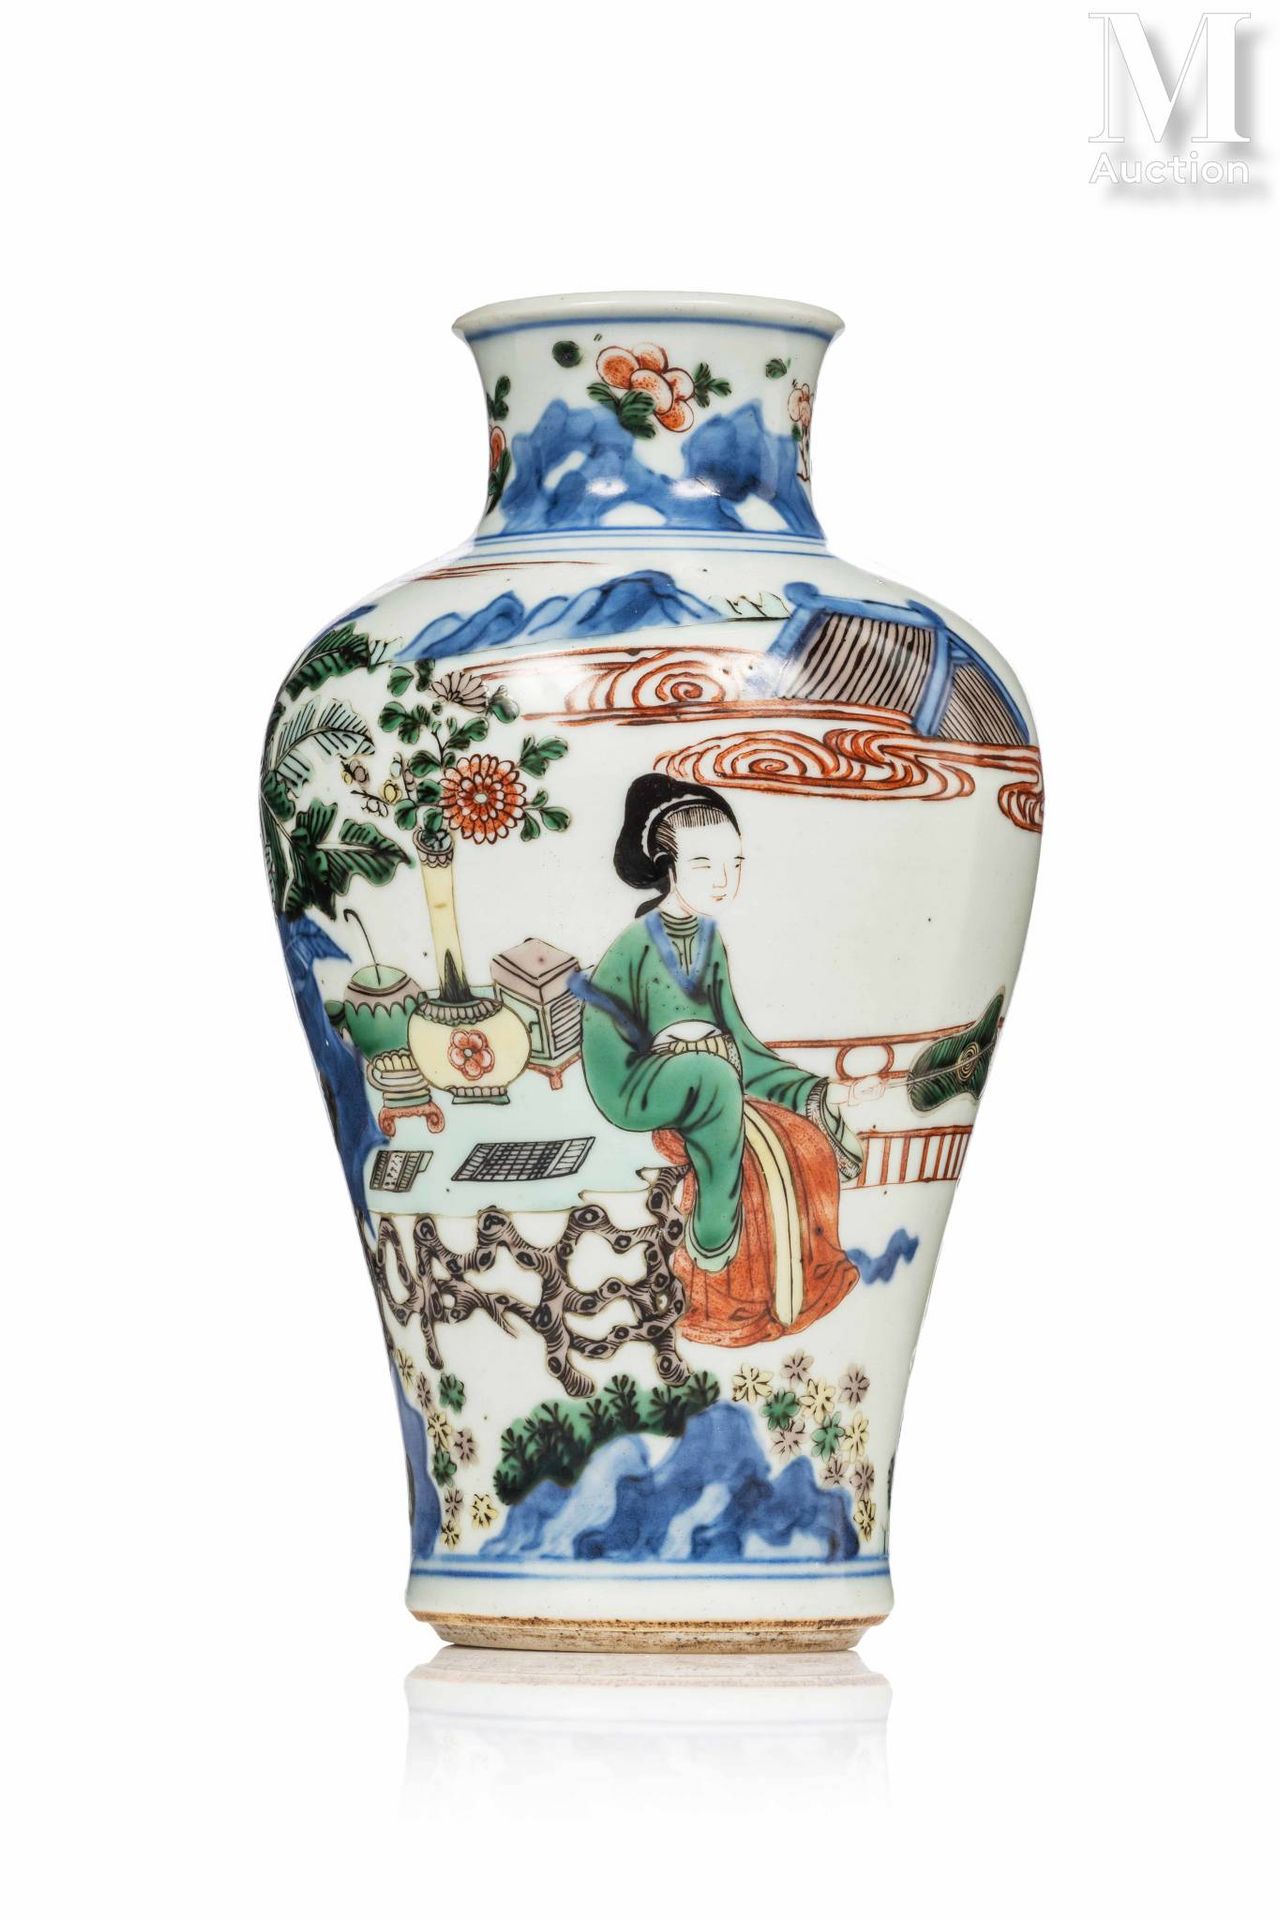 *CHINE, Epoque Transition, XVIIe siècle 小瓷器花瓶

狭长的底座，锥形的瓶身，高高隆起的瓶肩，用五彩珐琅彩装饰着一个优雅&hellip;